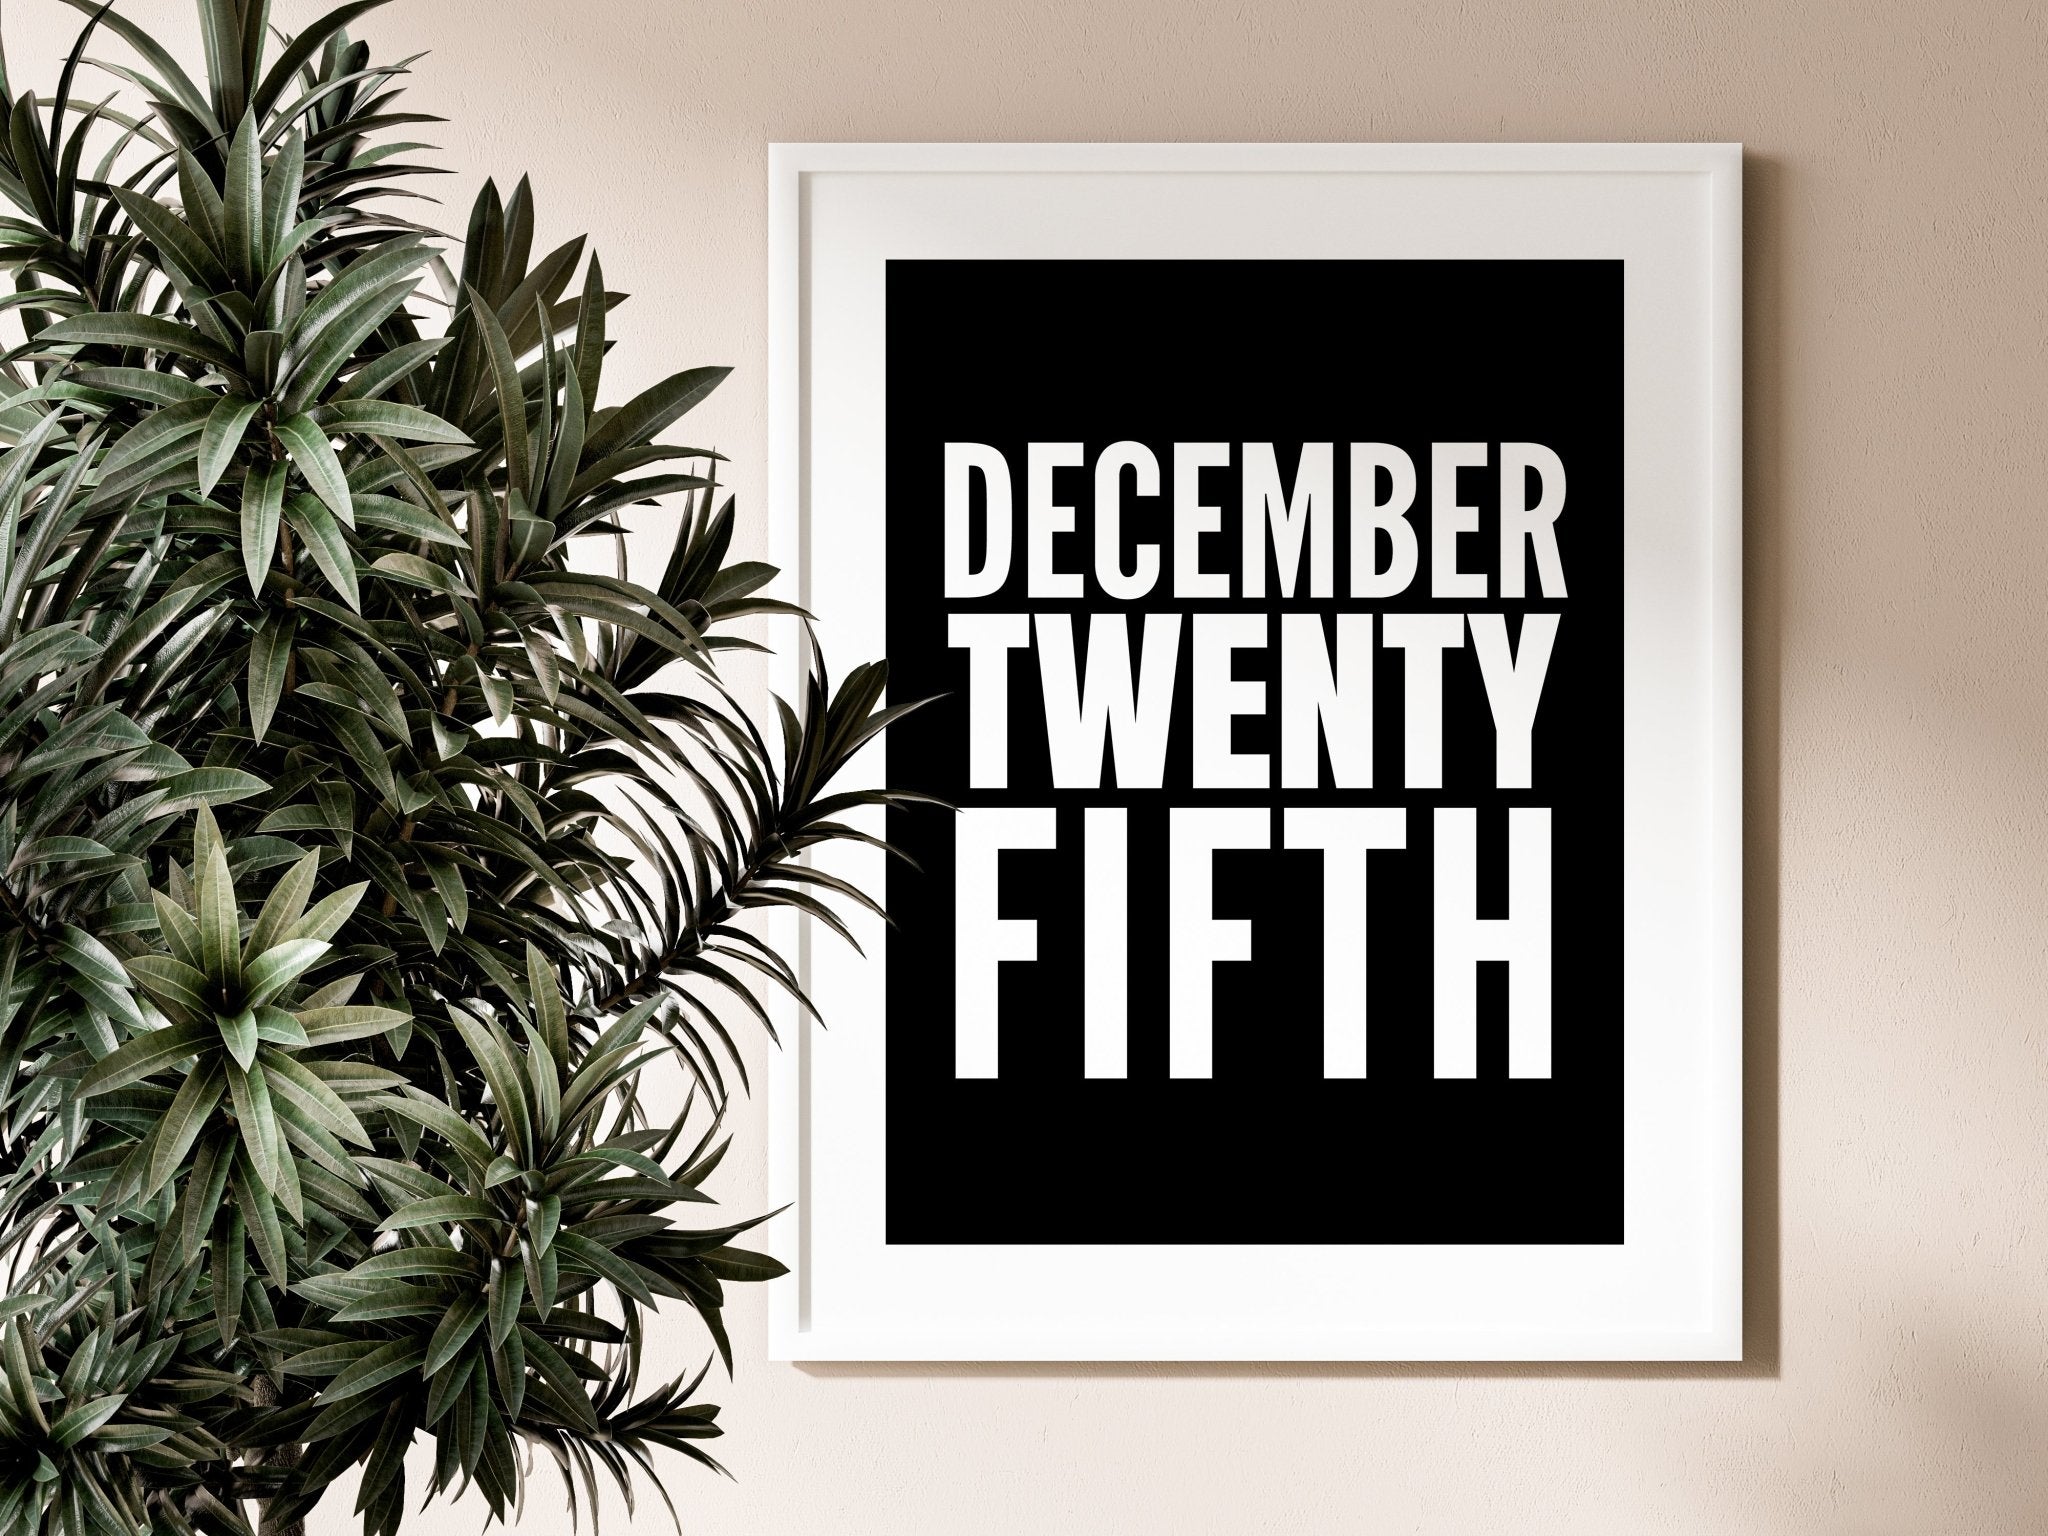 December Twenty Fifth Print